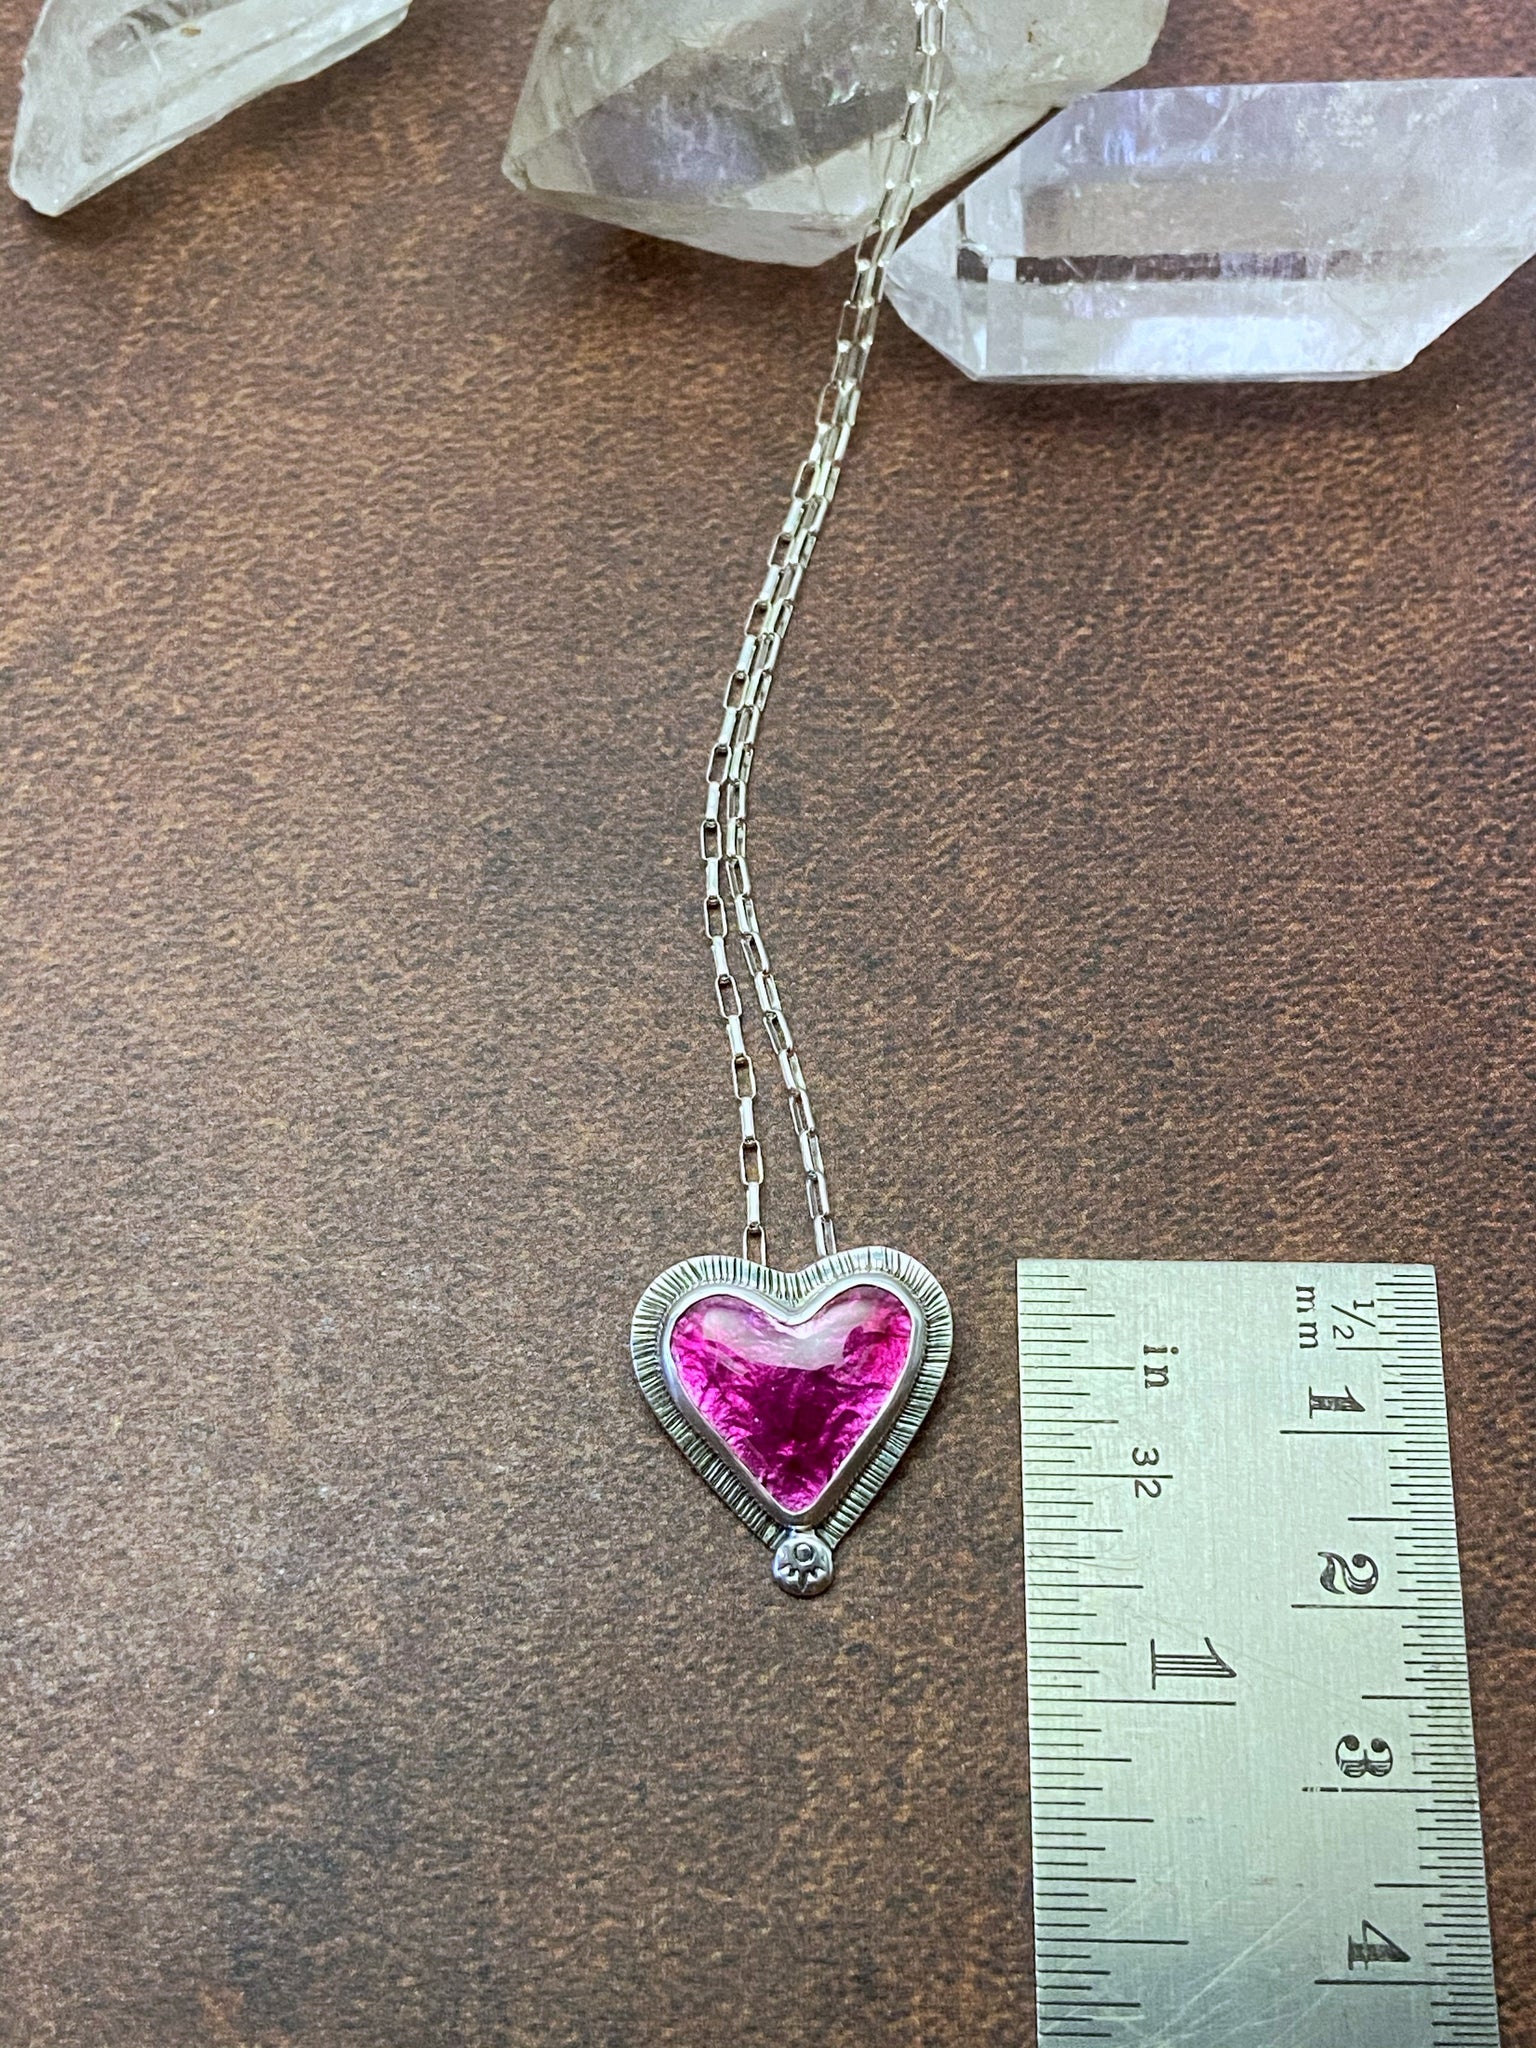 Silver Red Enamel Heart Necklace